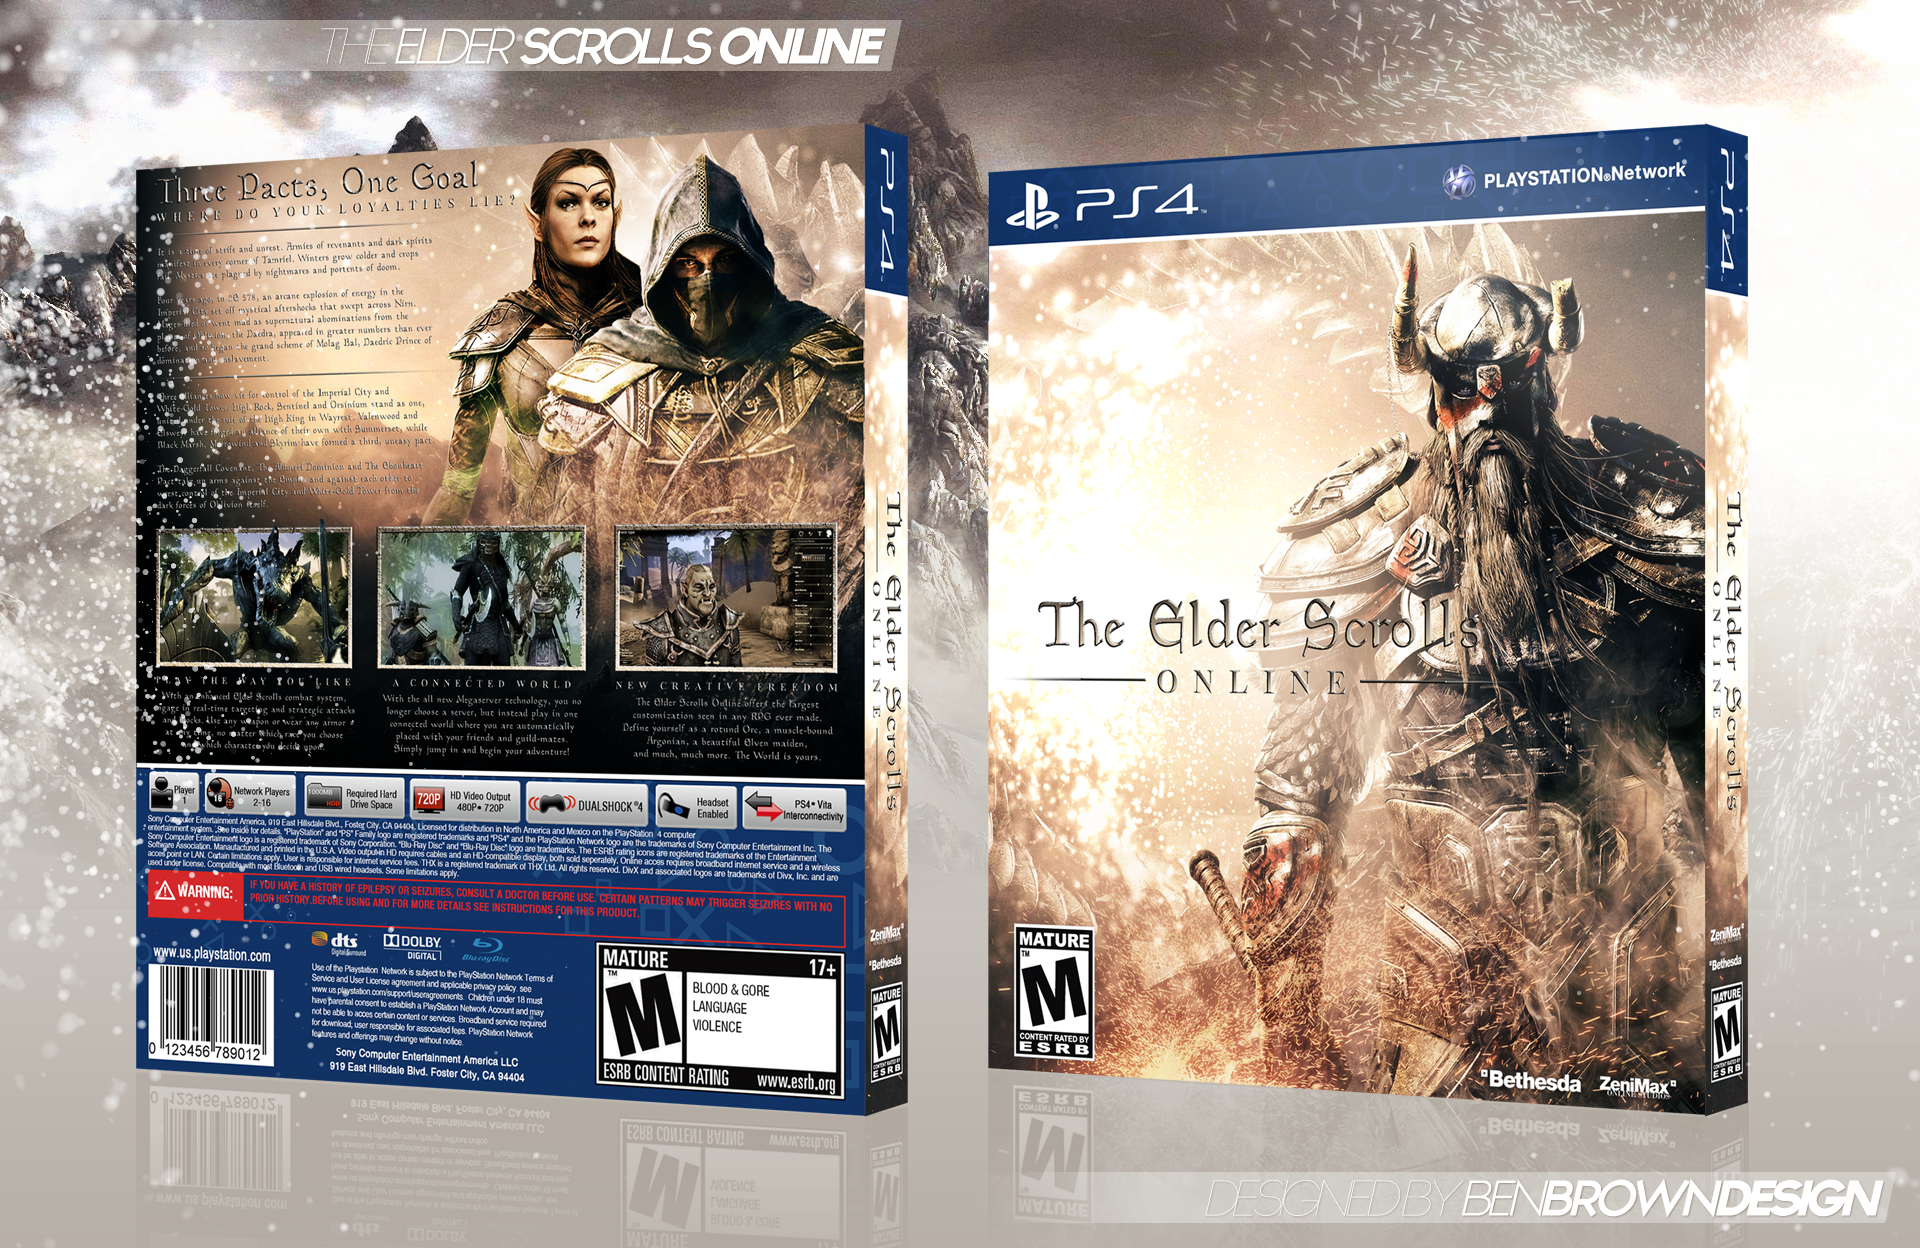 The Elder Scrolls: Online box cover